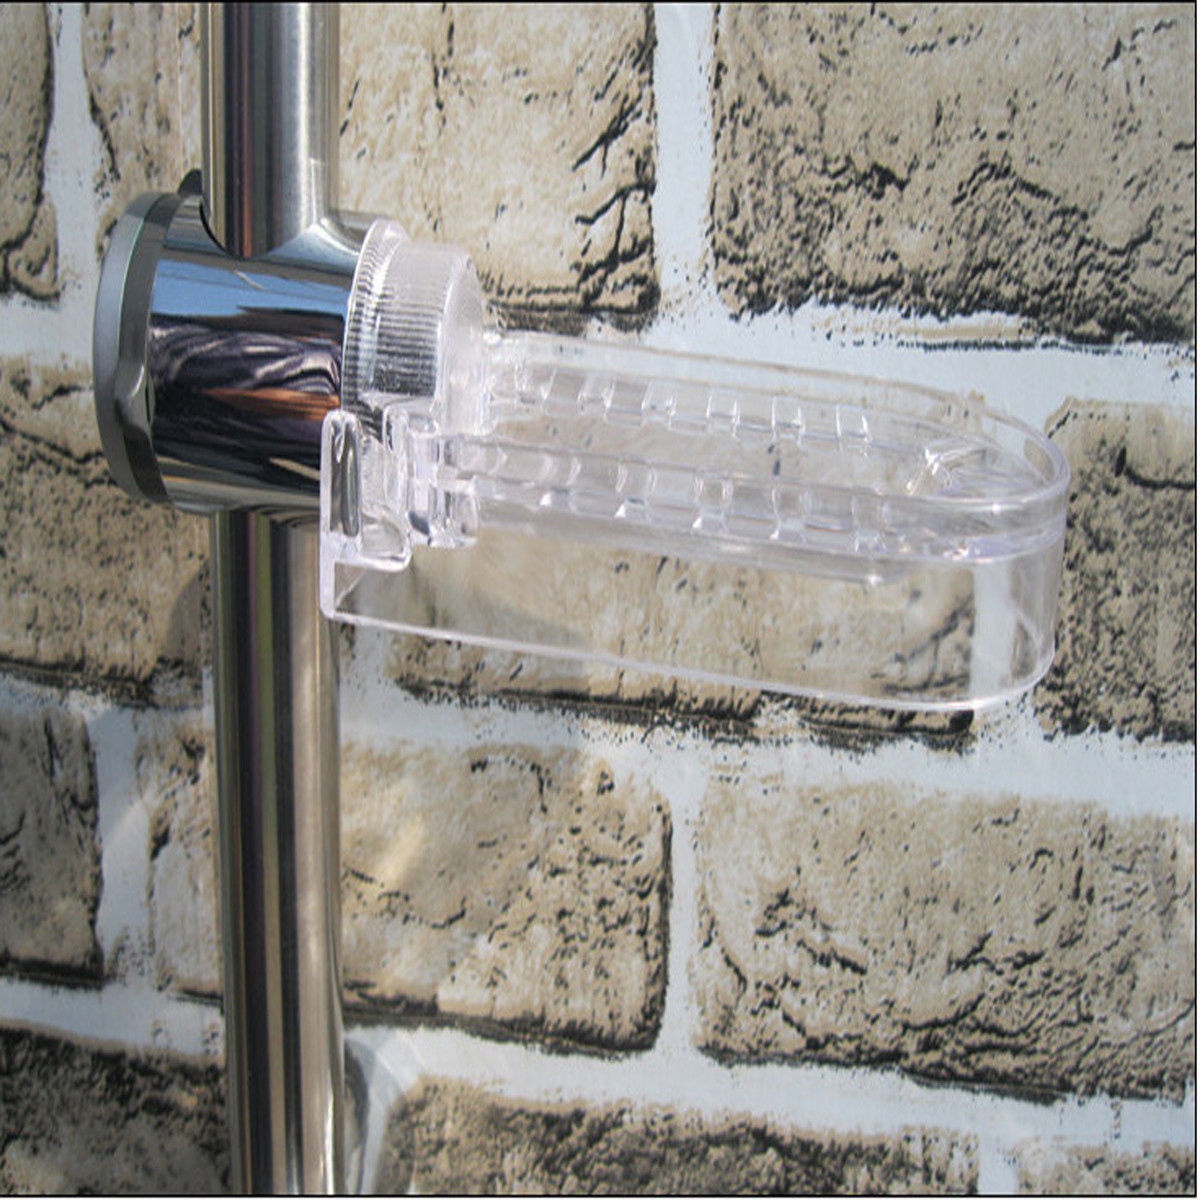 Aluminium-Shower-Head-Riser-Slide-Rail-Adjustable-Brackets-with-Soap-Dish-1033850